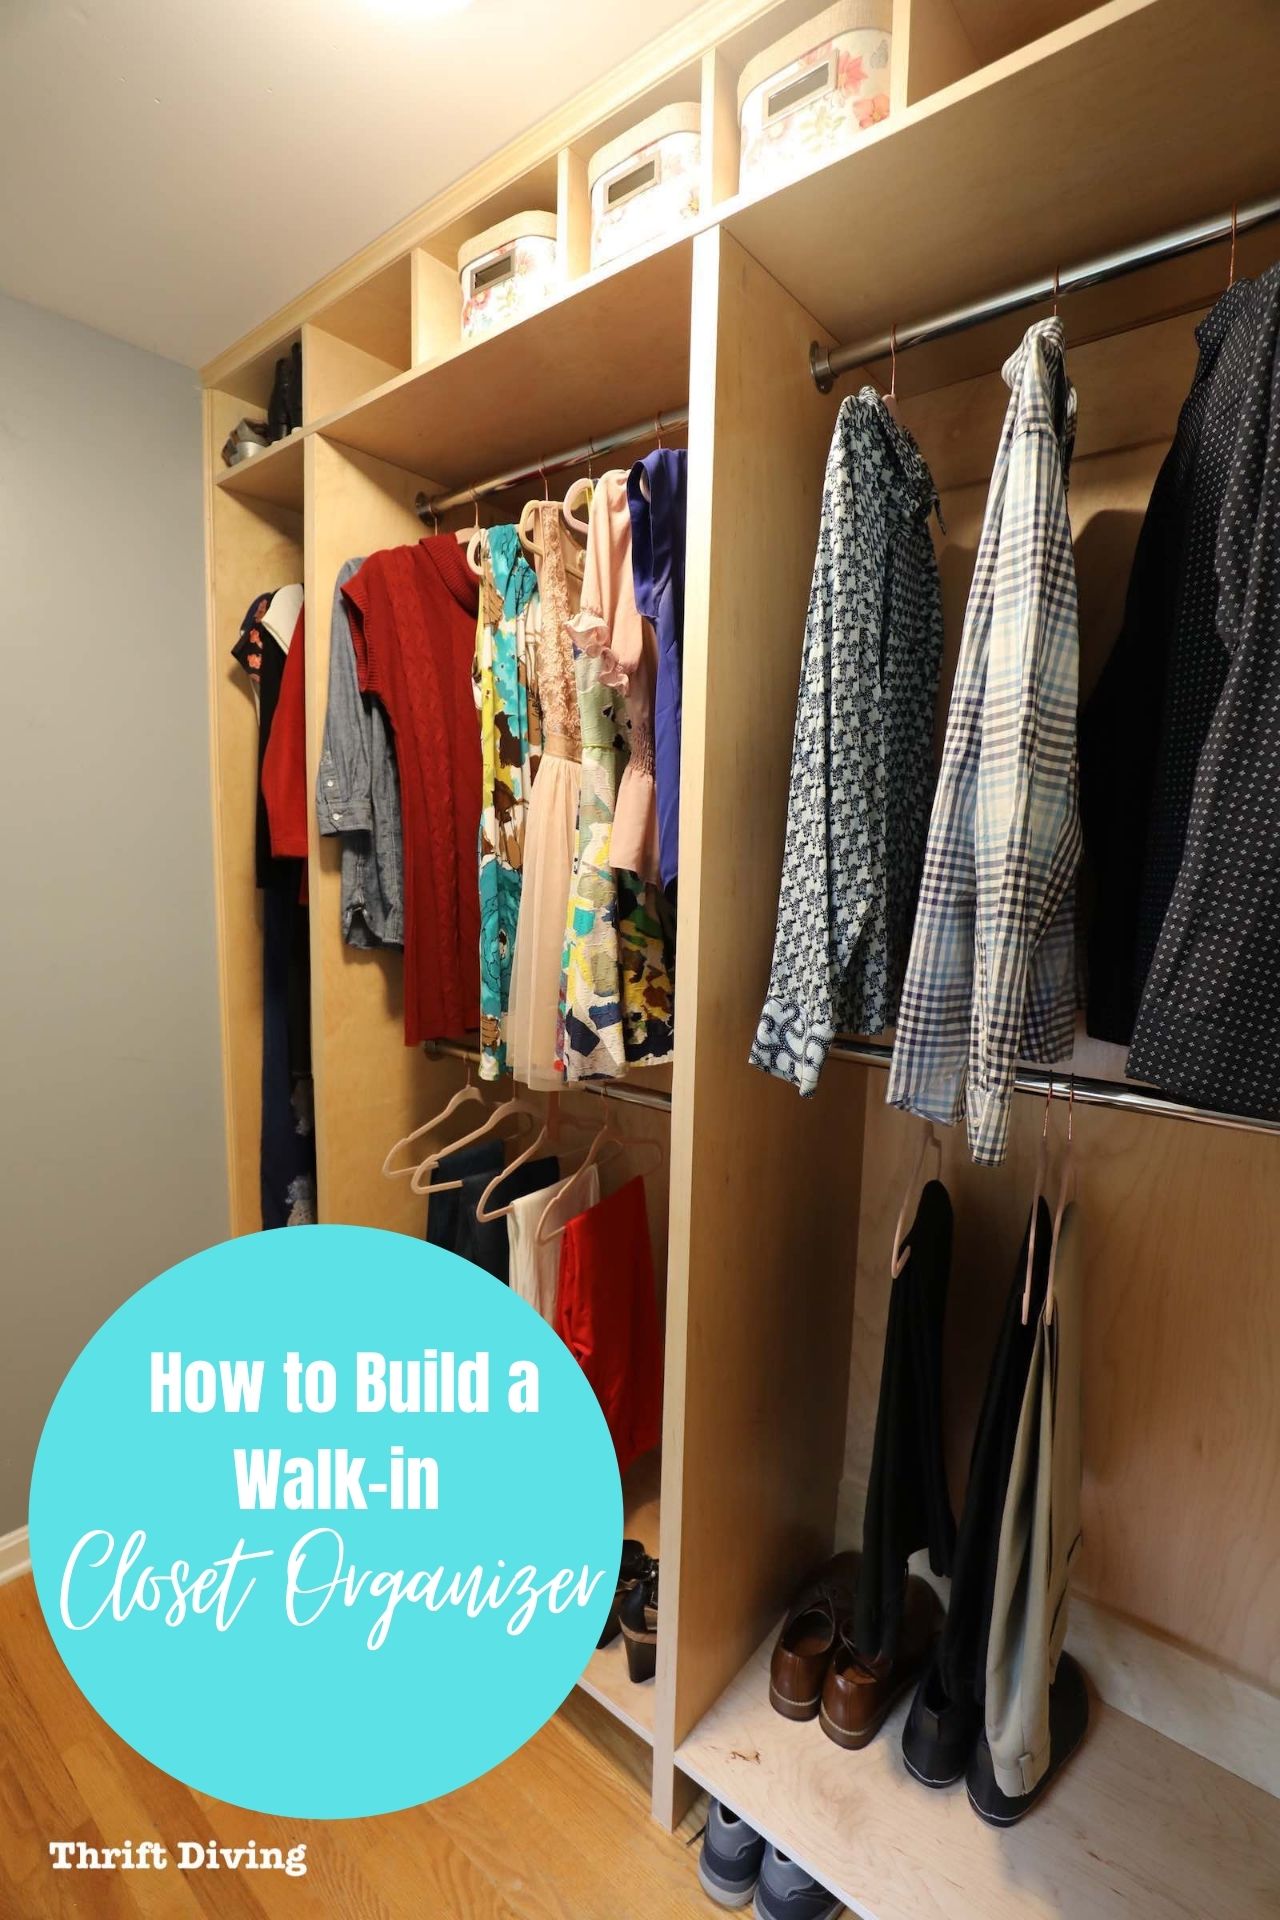 https://thriftdiving.com/wp-content/uploads/2020/11/How-to-Build-a-Walk-in-Closet-Organizer.jpg